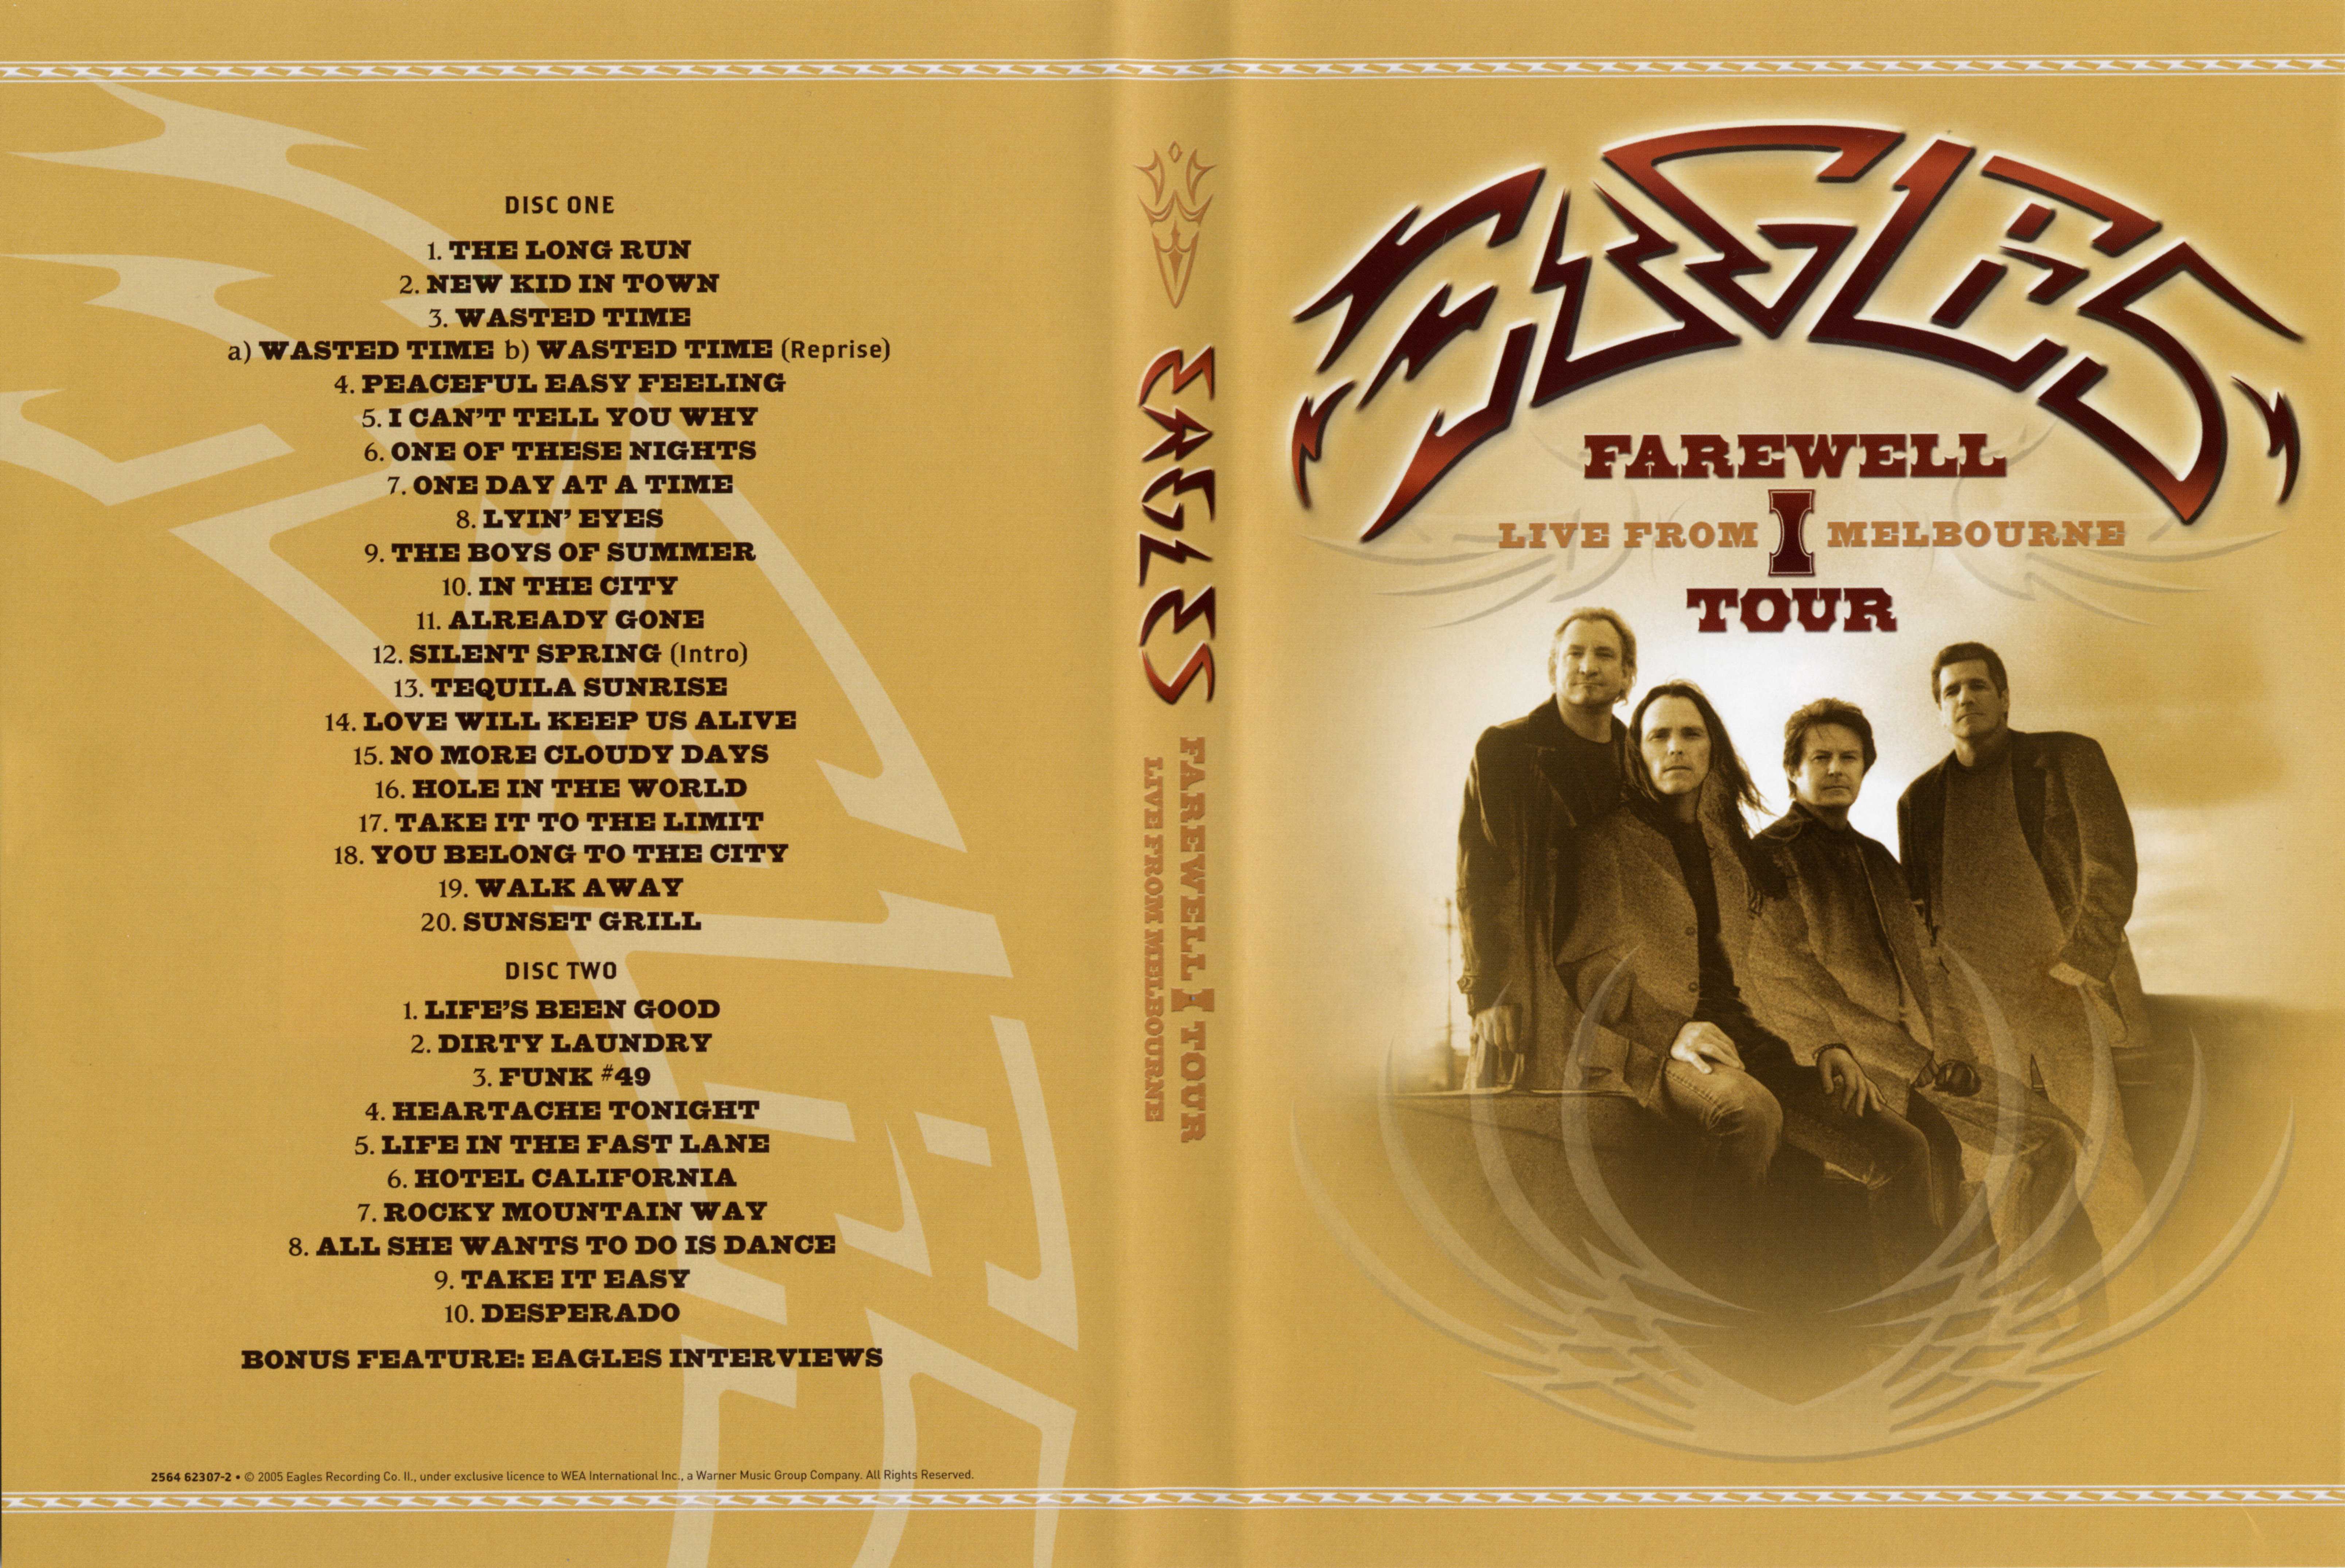 Jaquette DVD Eagles farewell tour